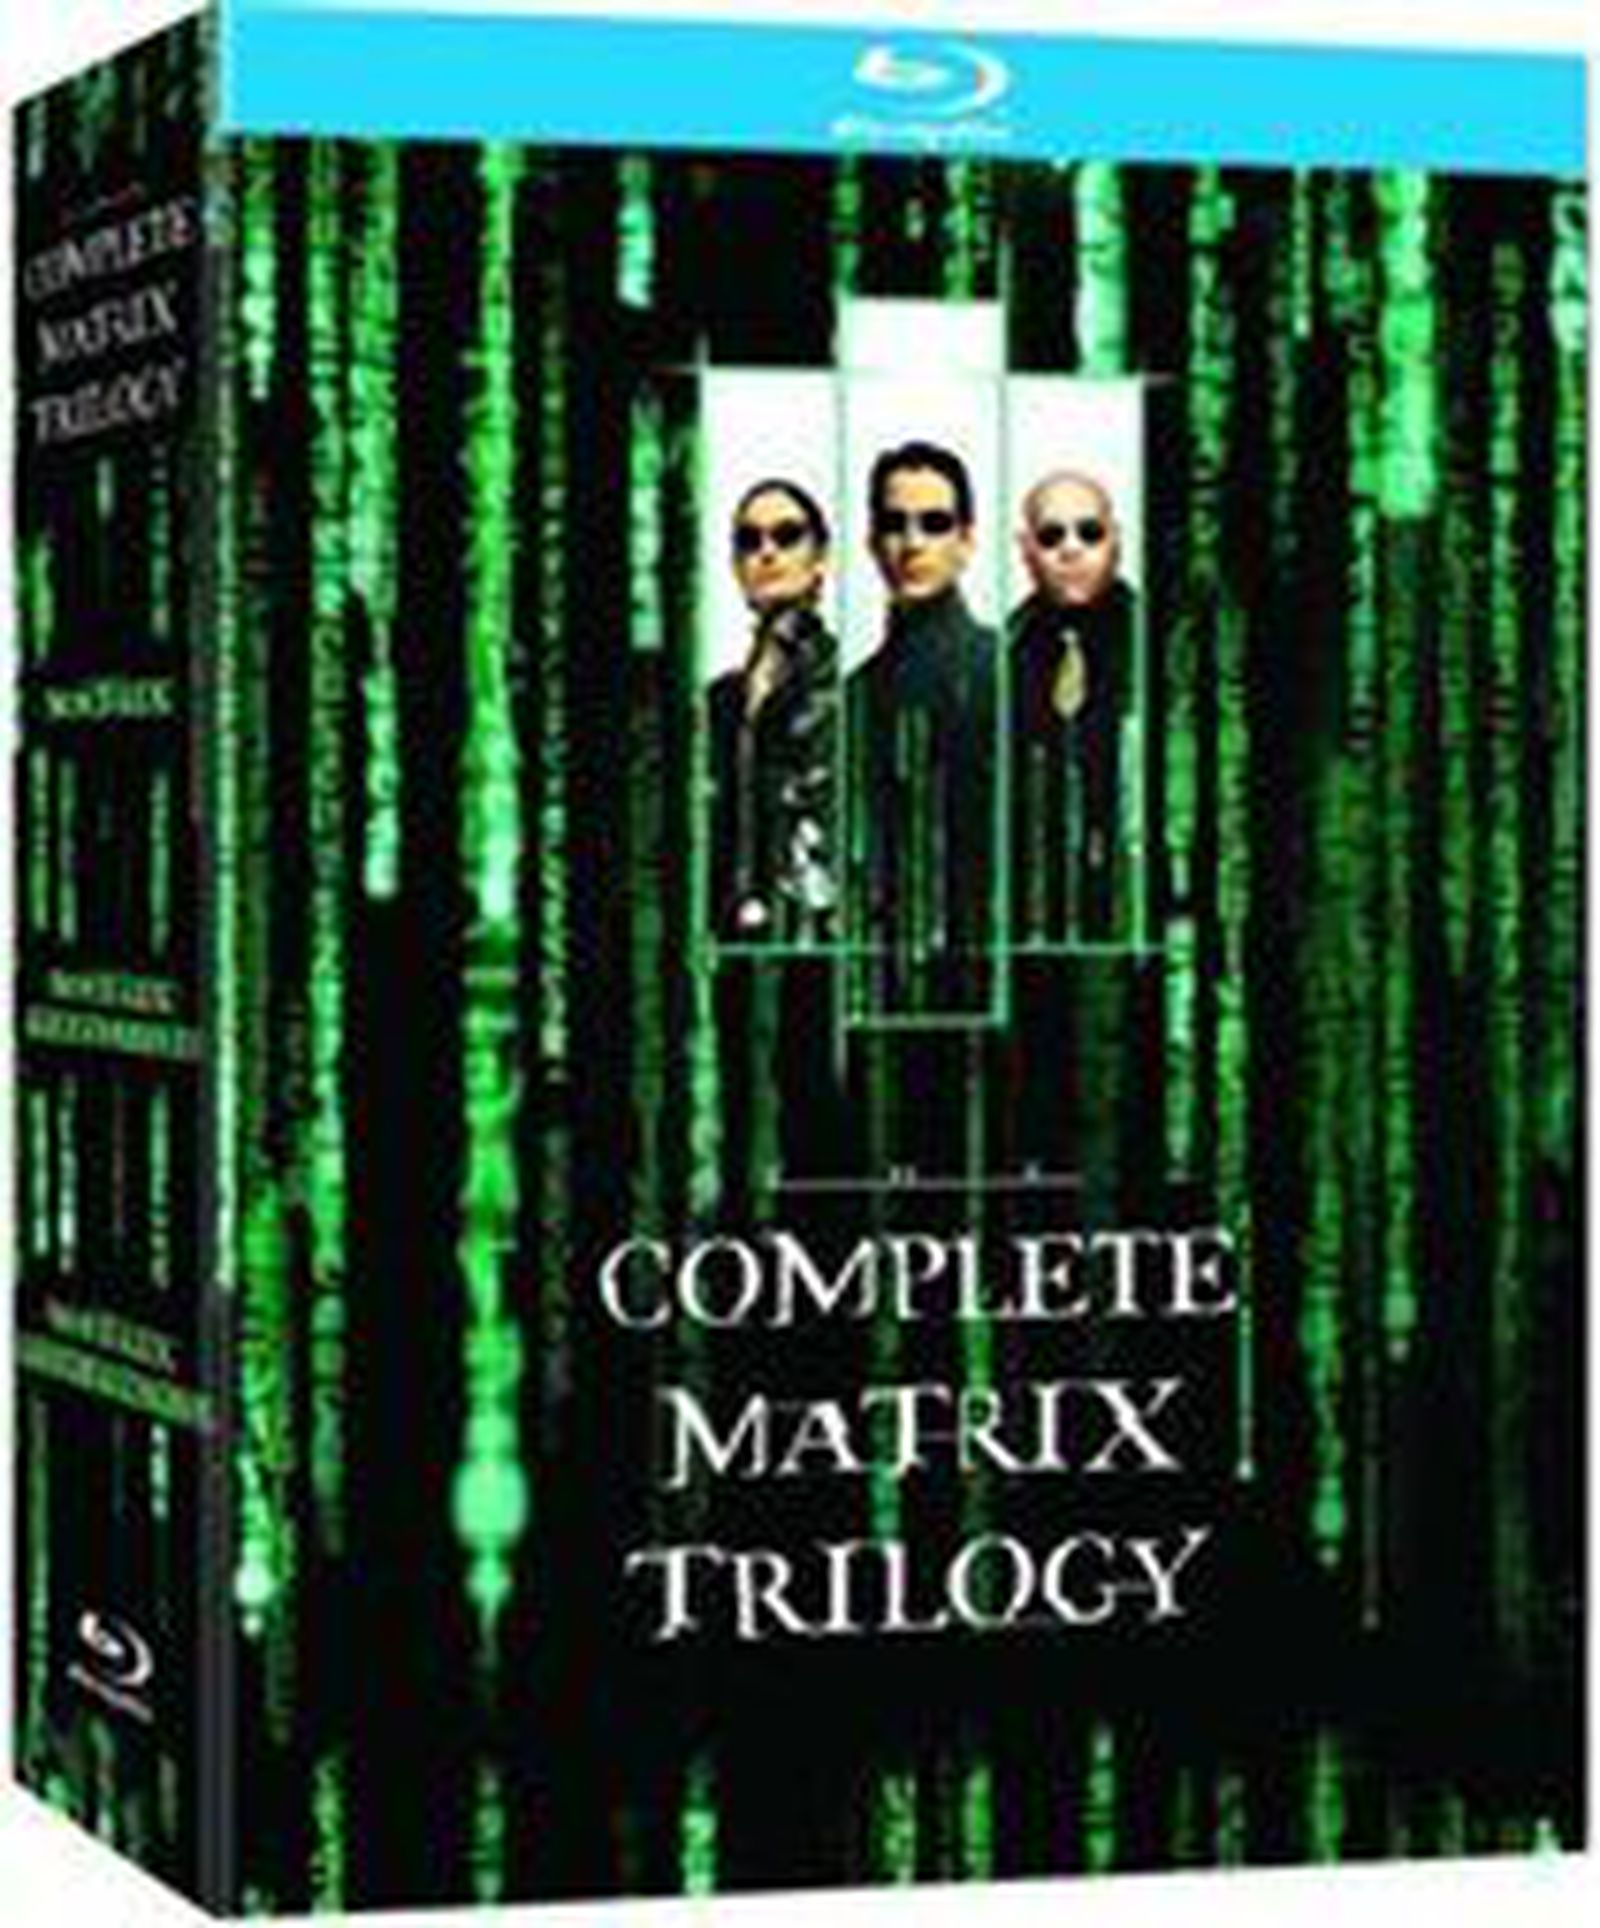 Complete Matrix Trilogy | The Wachowski Brothers